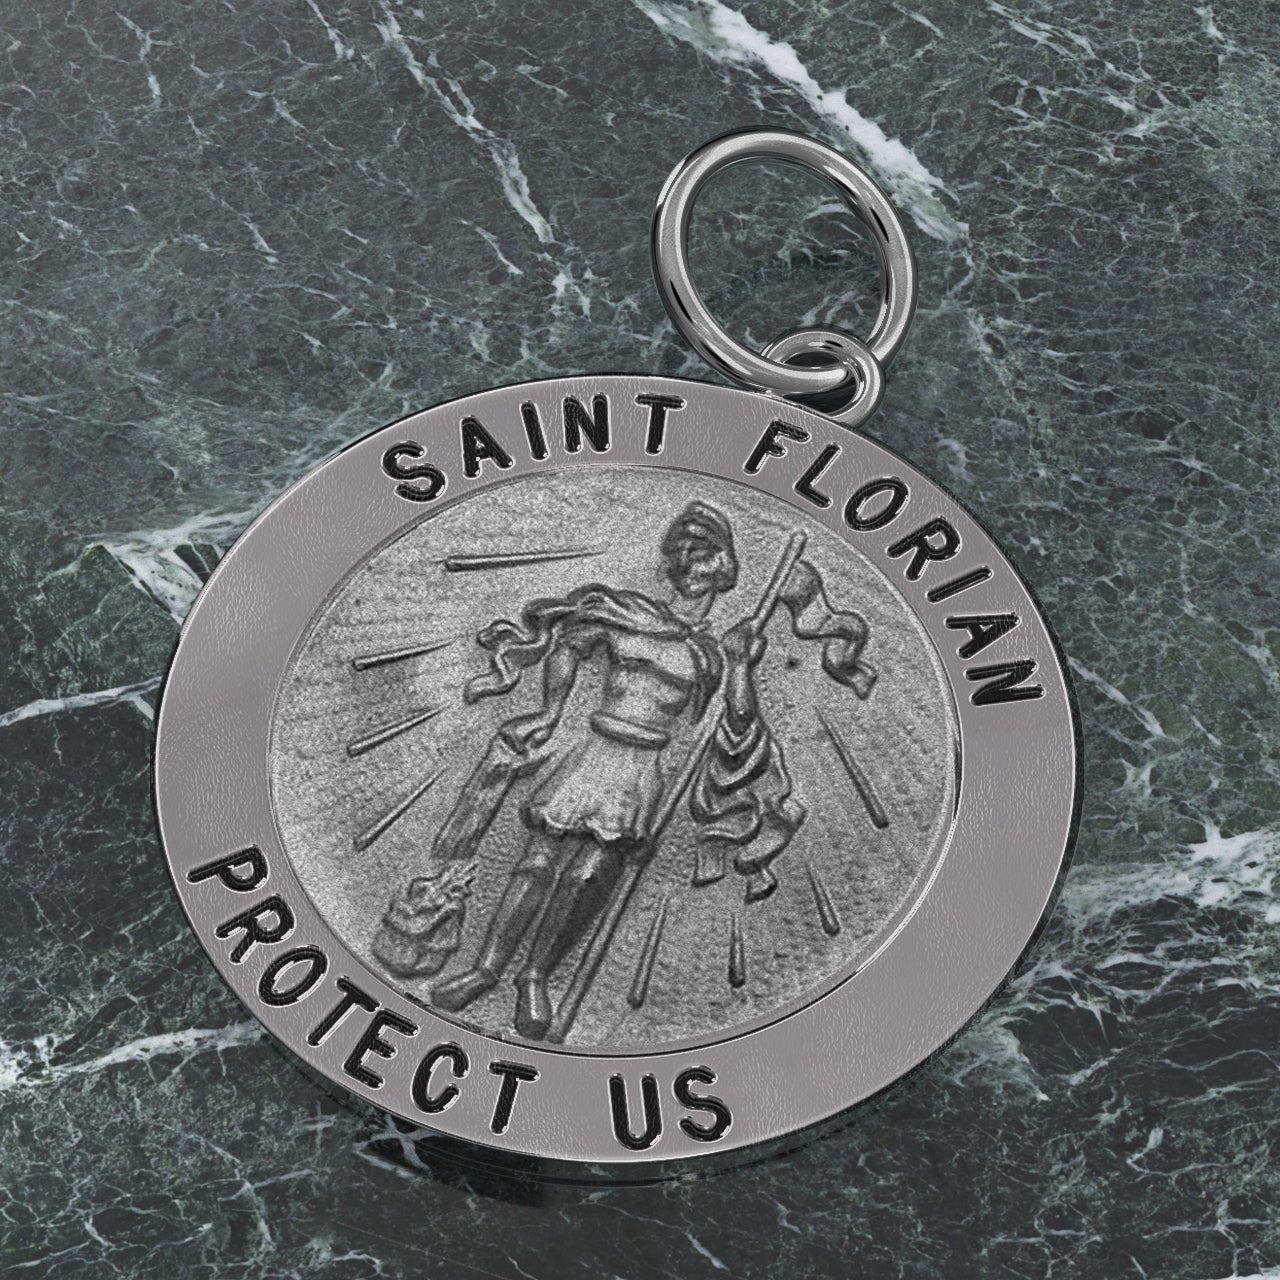 Ladies 925 Sterling Silver Saint Florian Round Antique Pendant Necklace, 22mm - US Jewels